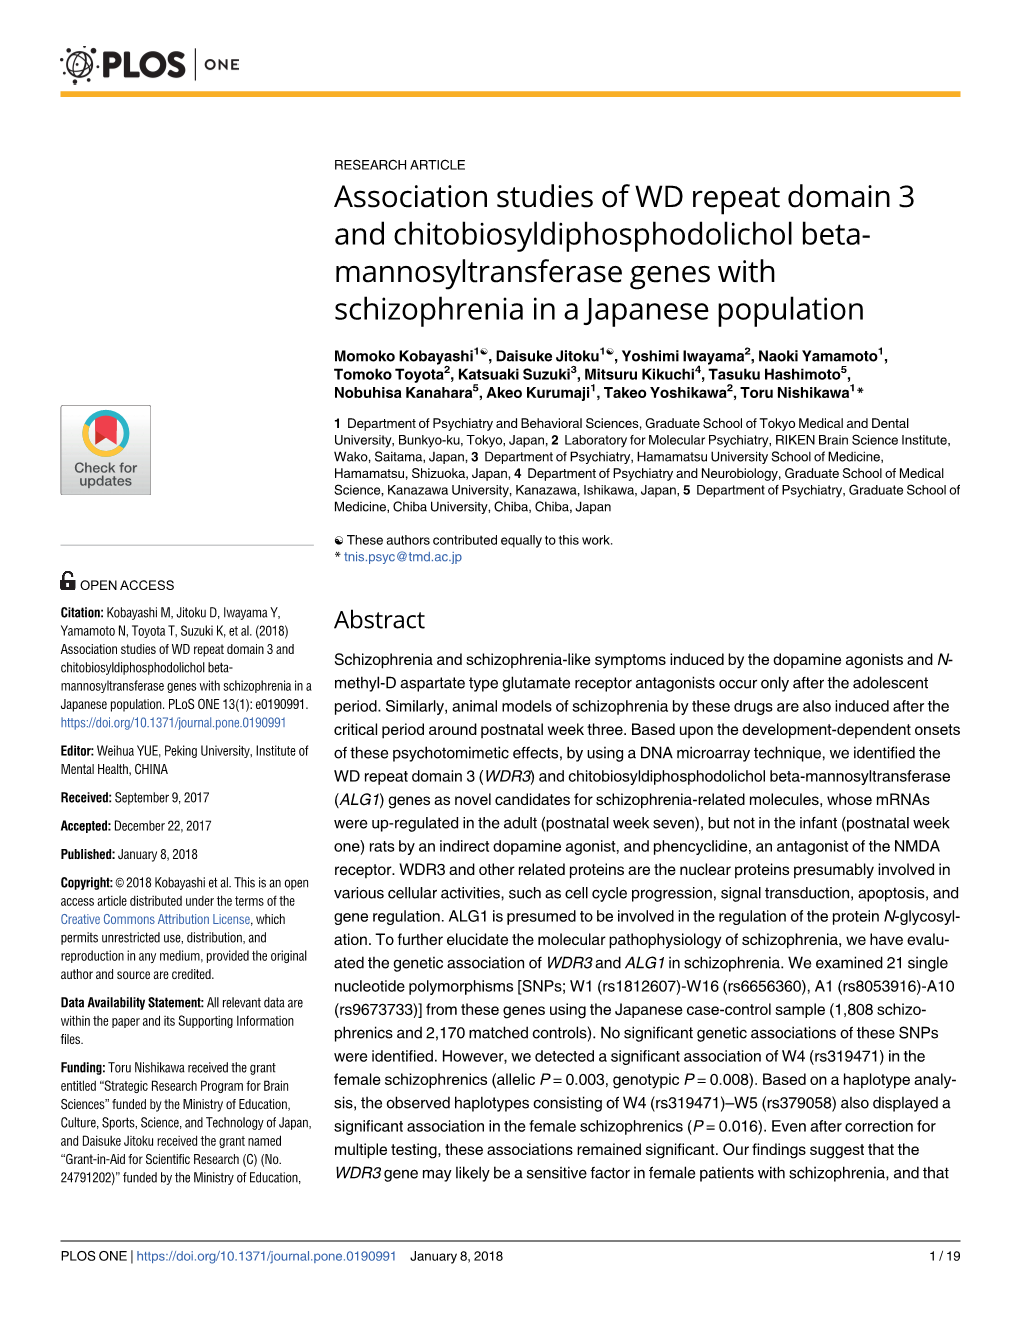 Association Studies of WD Repeat Domain 3 and Chitobiosyldiphosphodolichol Beta- Mannosyltransferase Genes with Schizophrenia in a Japanese Population